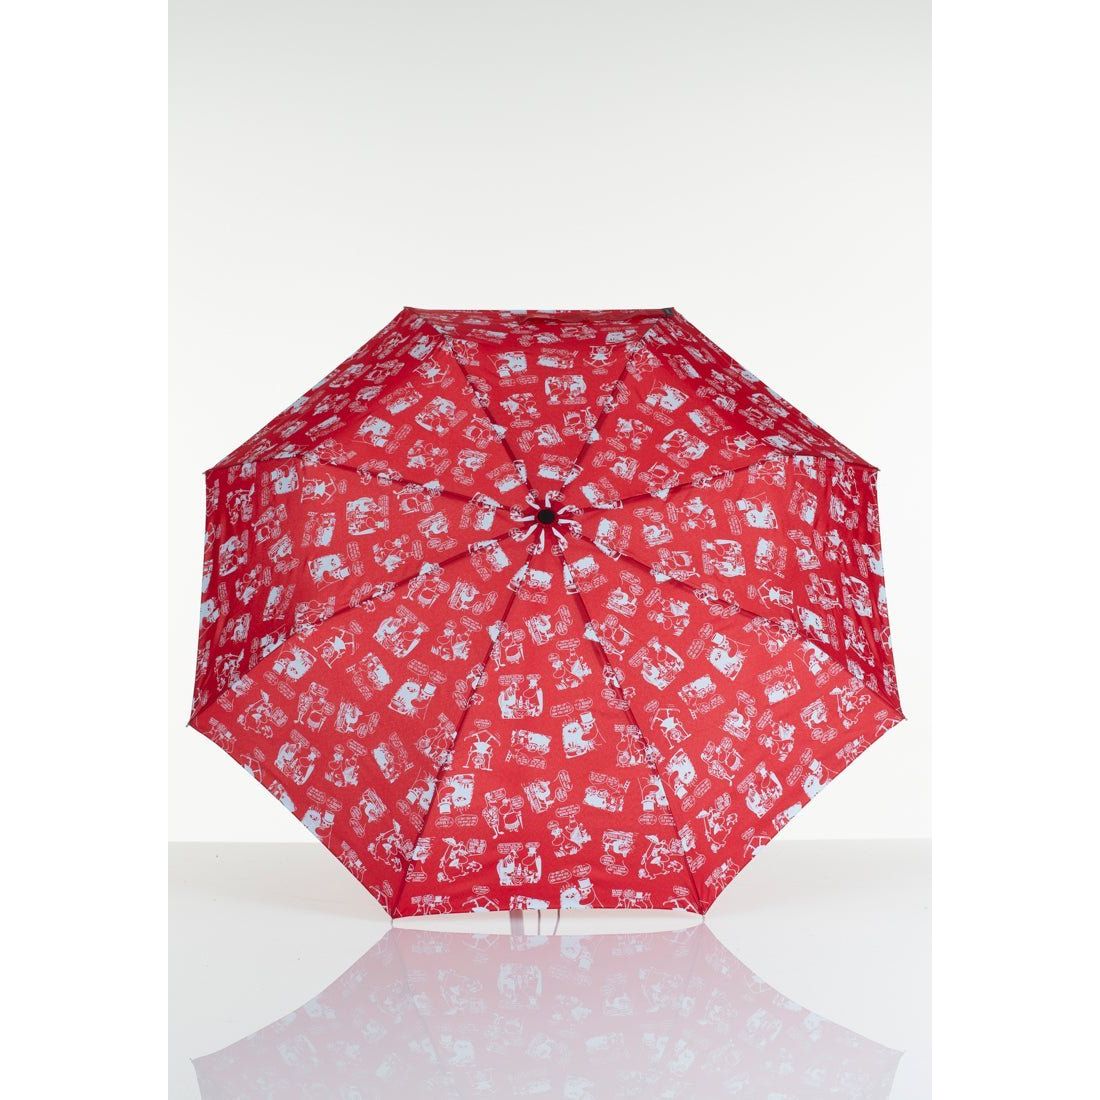 The Moomins umbrella 100cm "Garden" Red